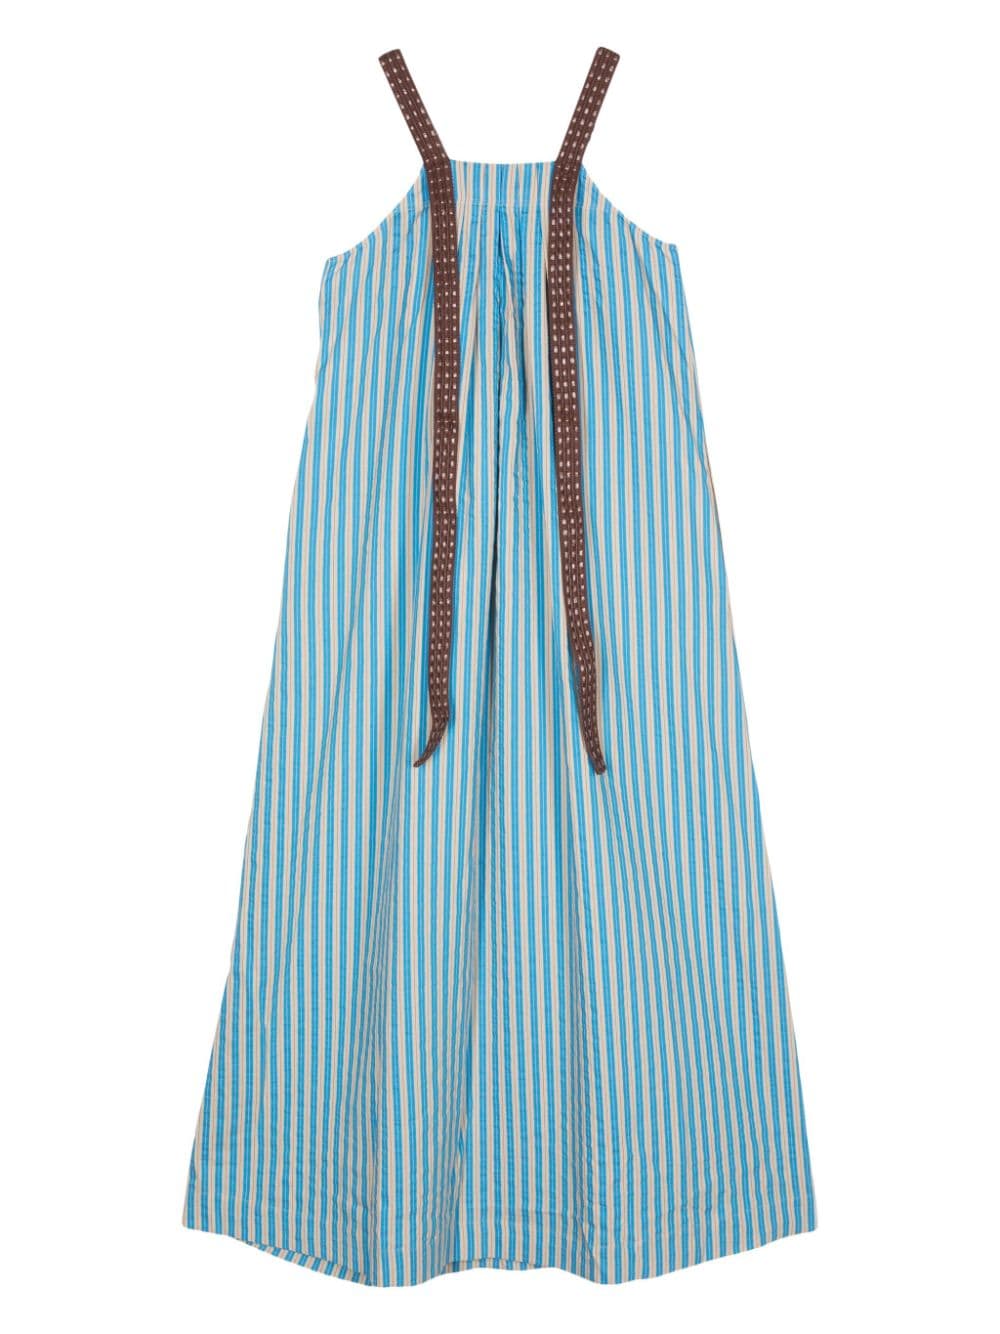 Alysi ALYSI- Striped Short Dress